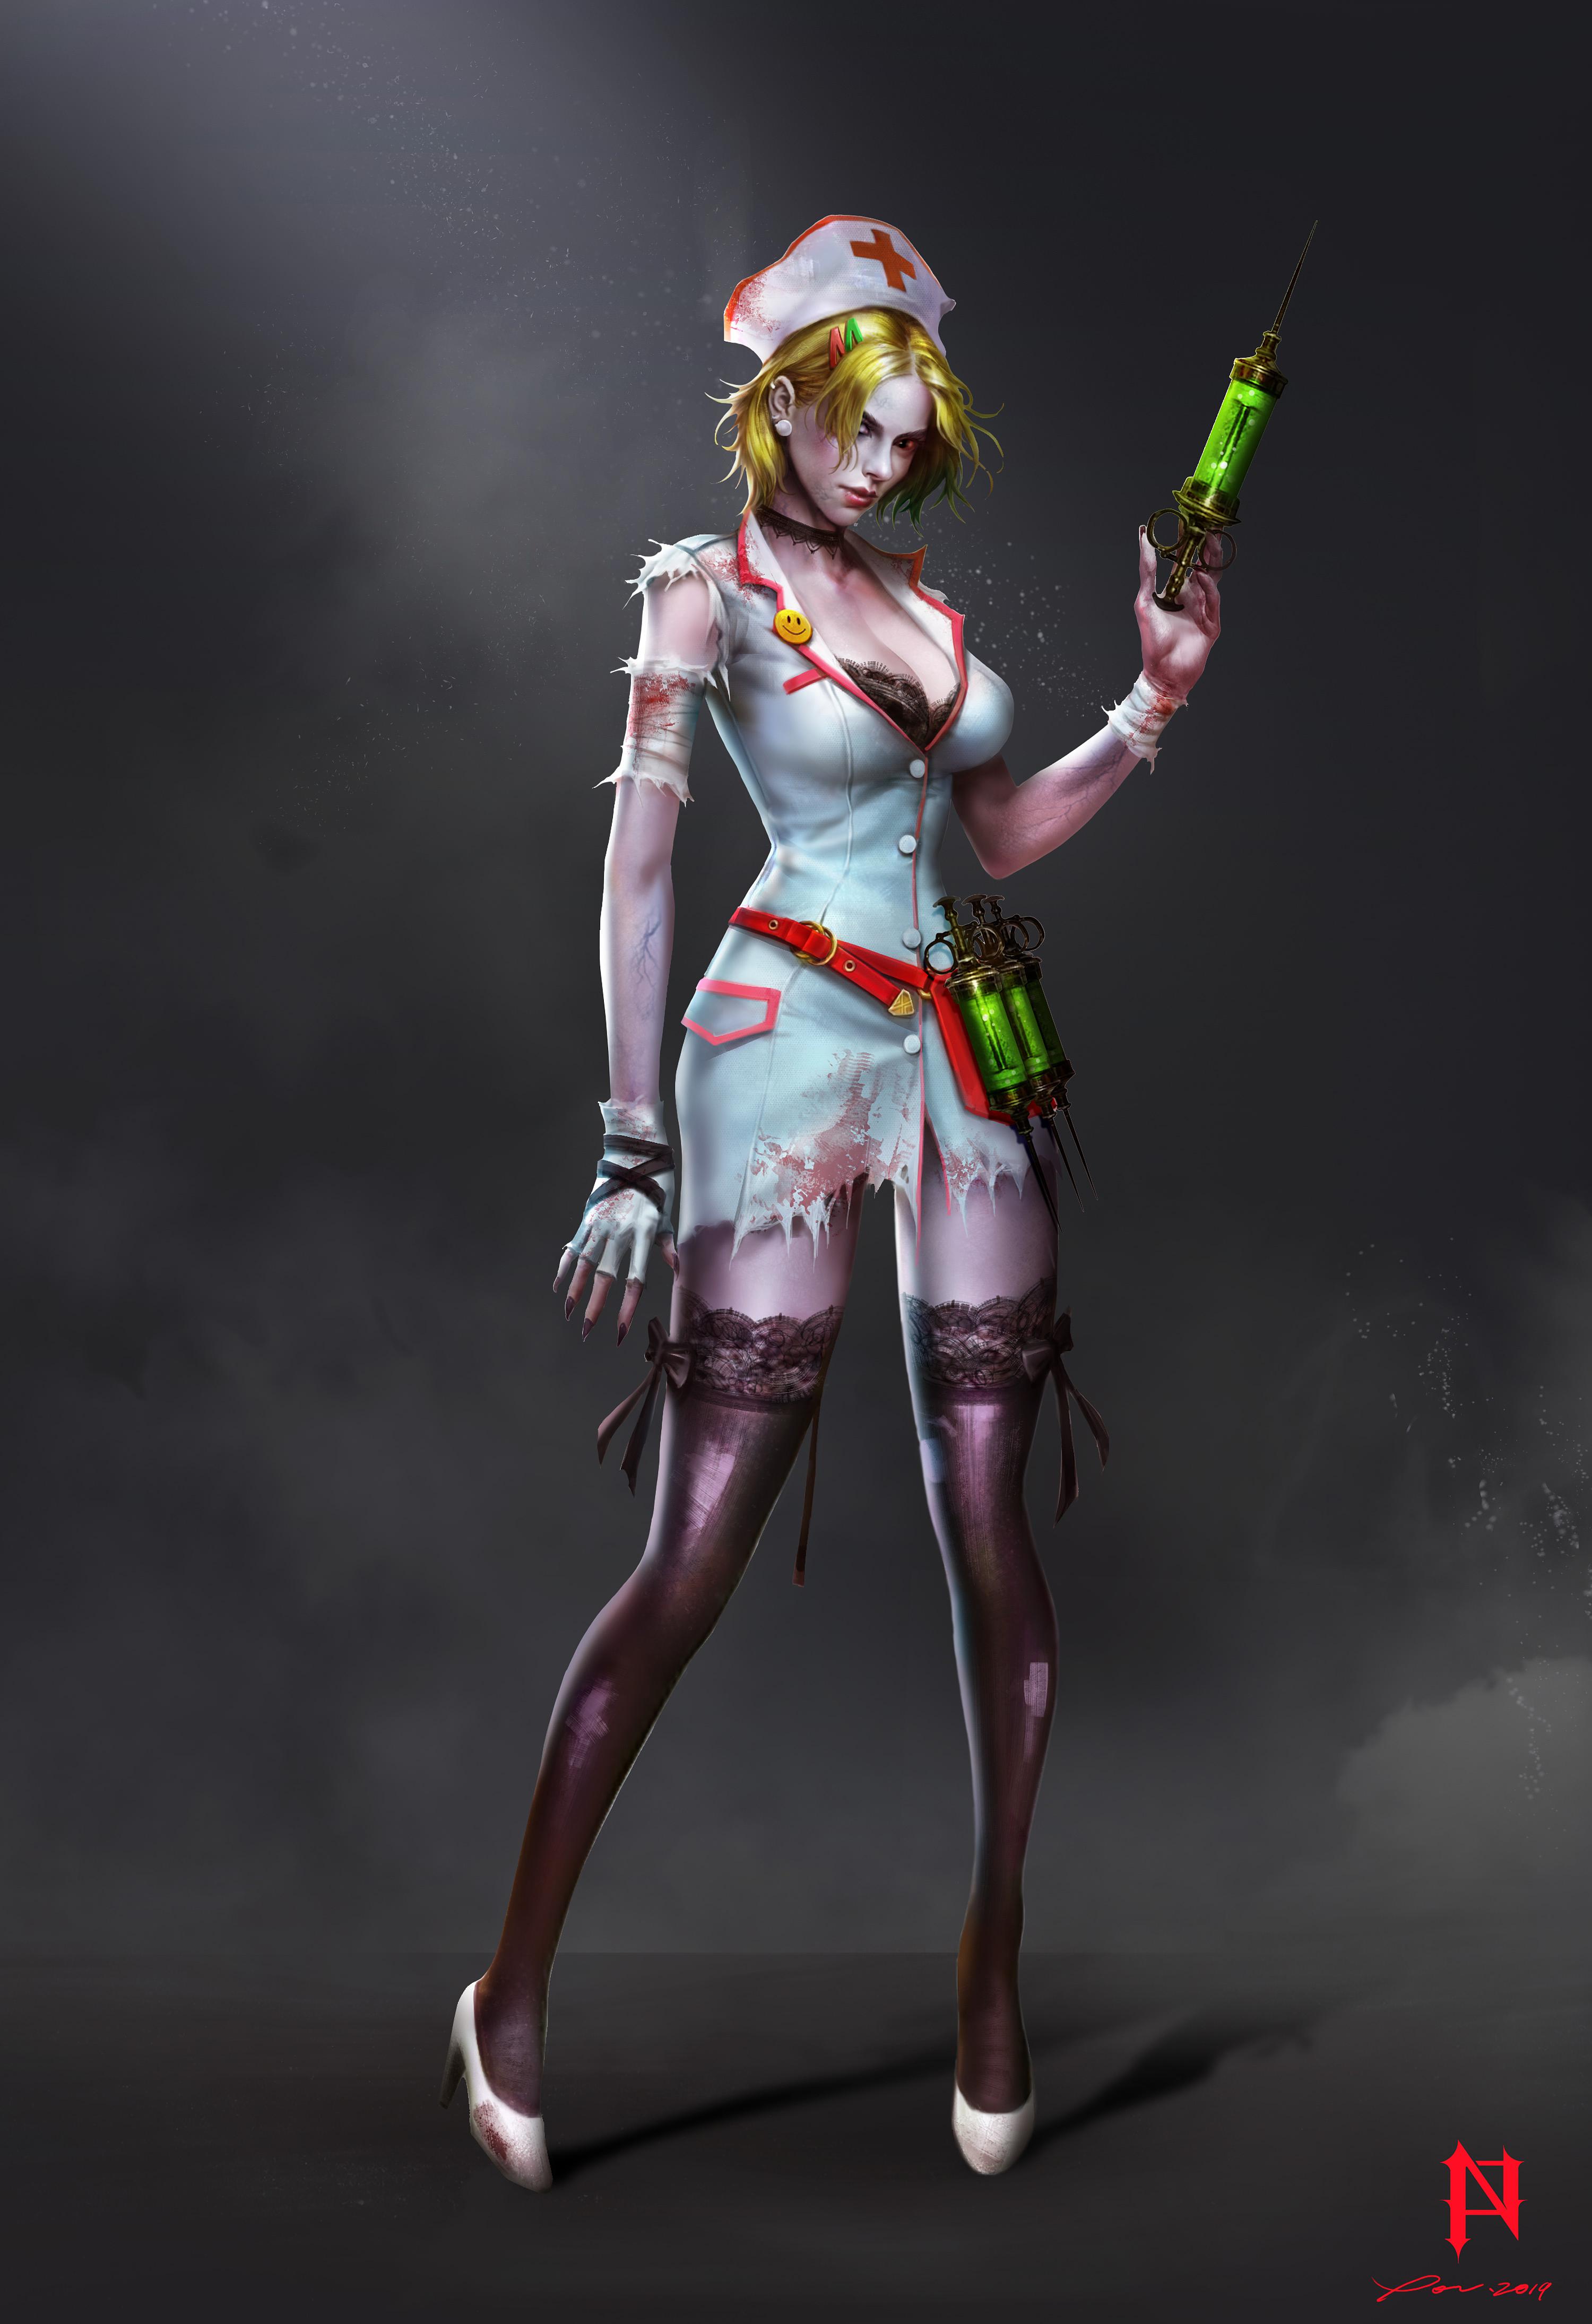 M-XL 角色扮演僵尸护士服 狂欢派对丧尸假血女护士装 万圣节医护-阿里巴巴